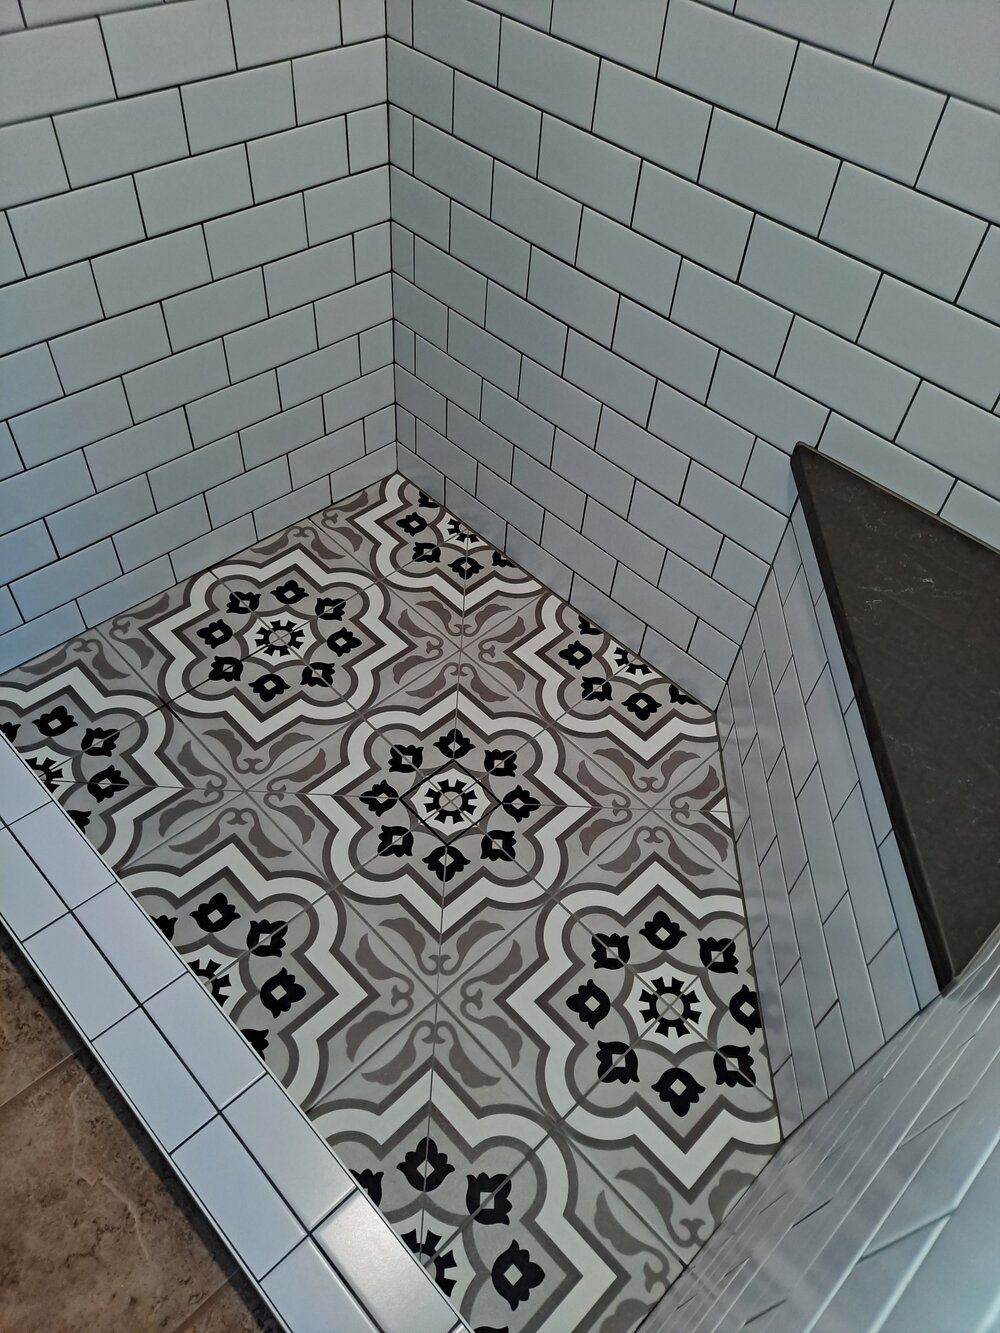 Flooring Installation Tile Installer, How Far Apart Should Tiles Be Spaced